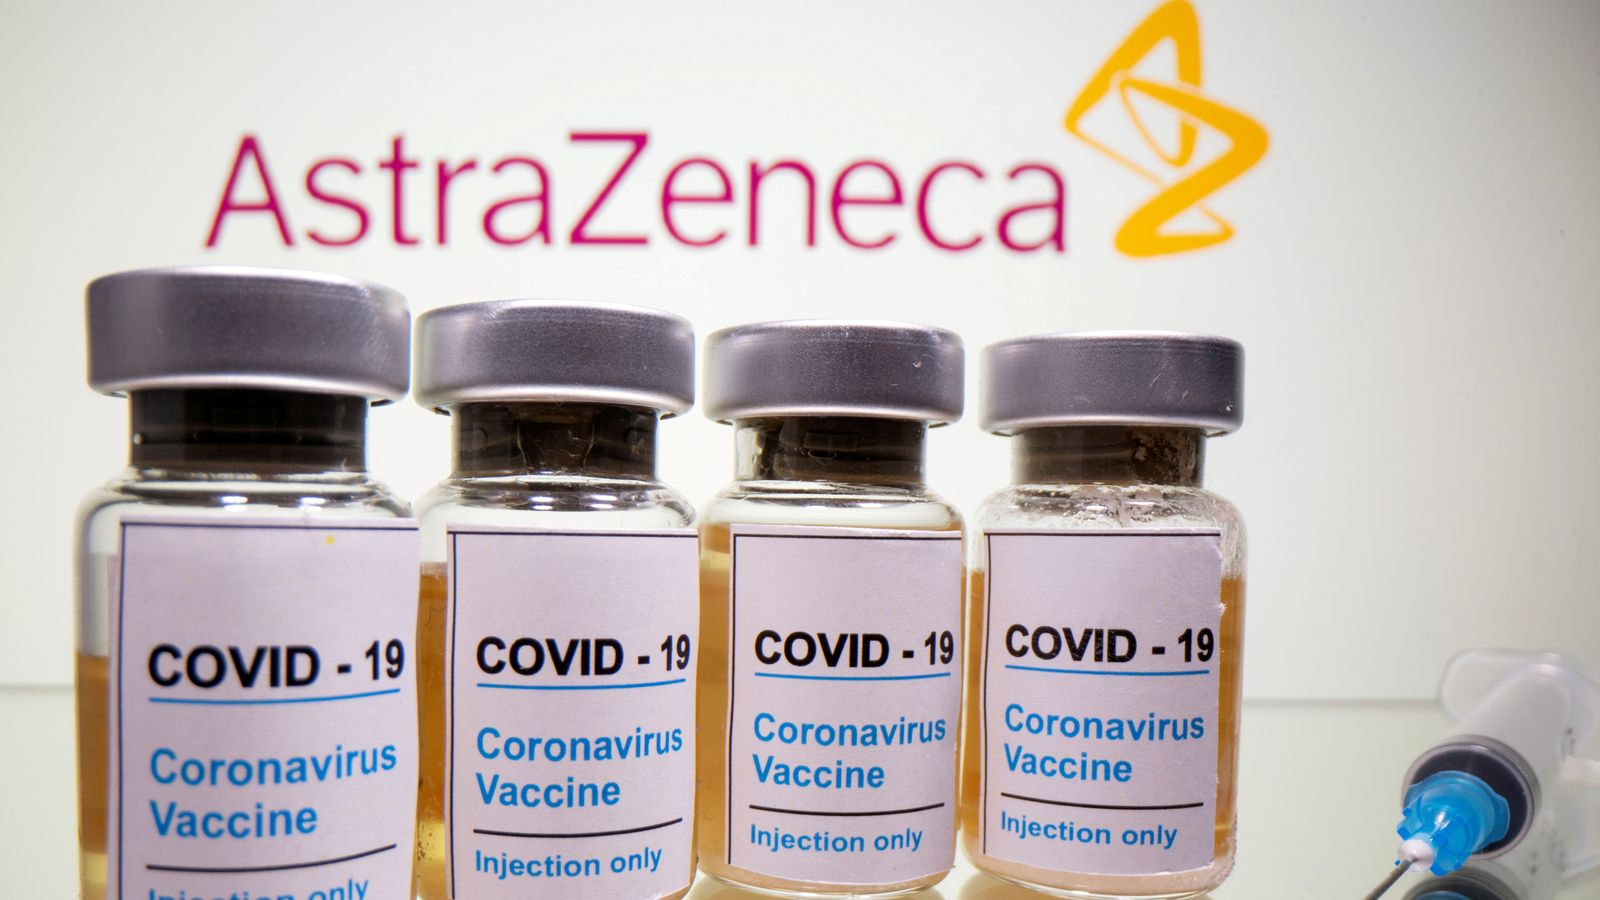 astrazeneca vaccine shows less effect against new south africa coronavirus variant